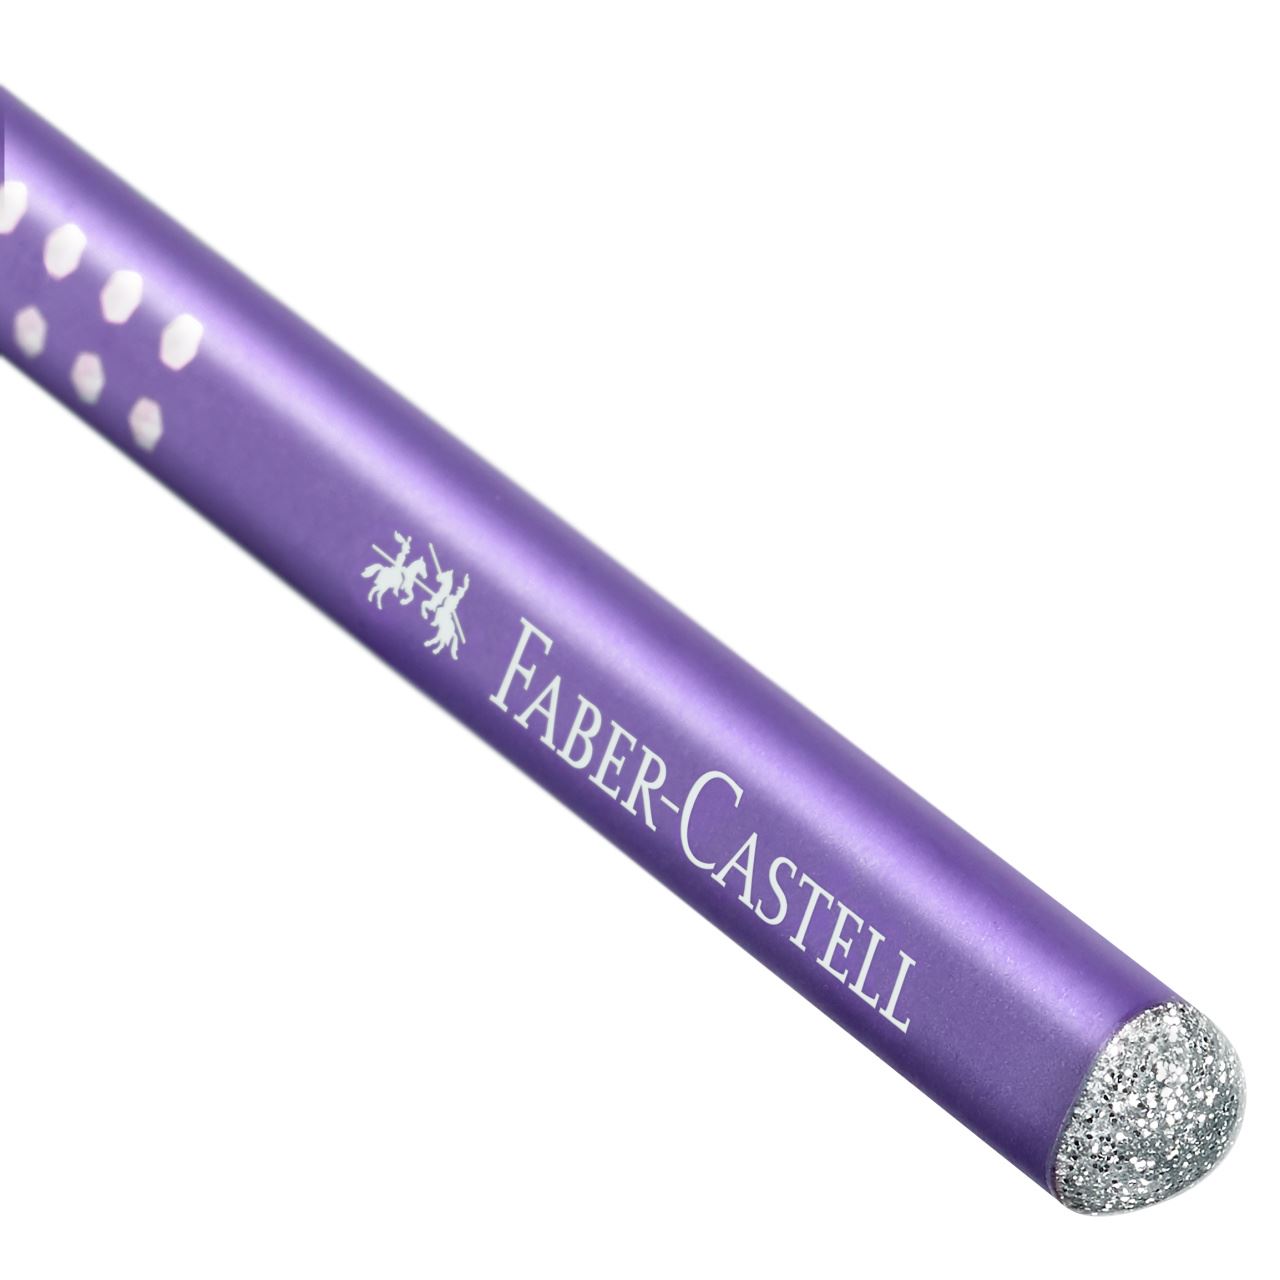 Faber-Castell - Sparkle graphite pencil, pearl purple